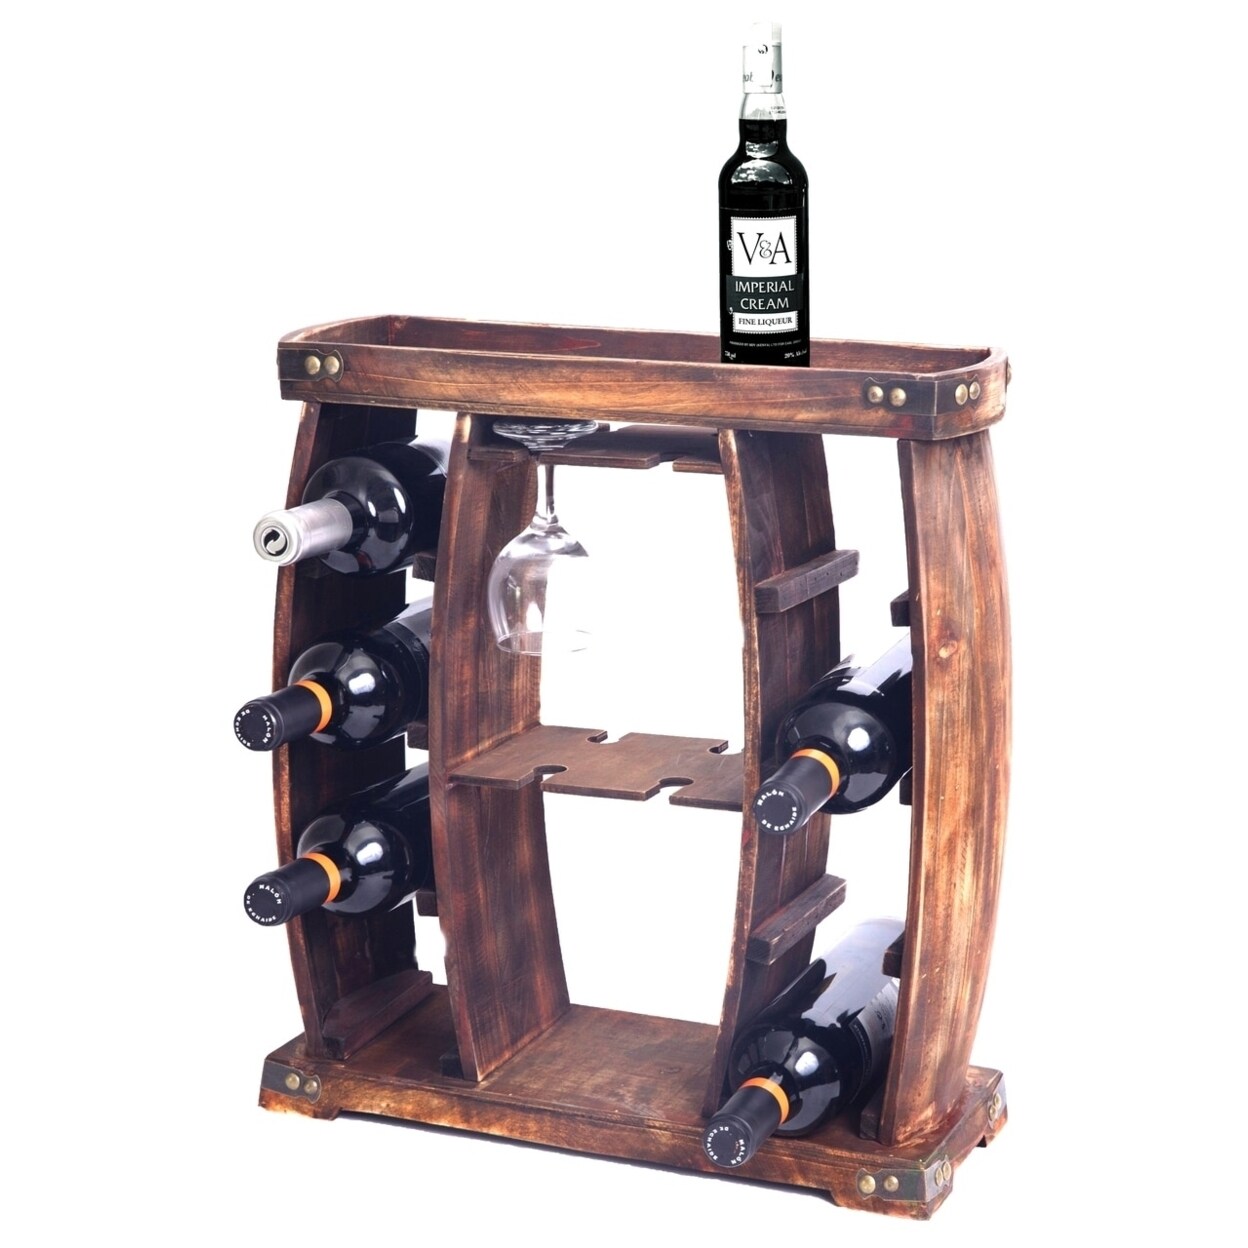 Vintiquewise Rustic Wooden Wine Rack with Glass Holder-8 Bottle Decorative Wine Holder